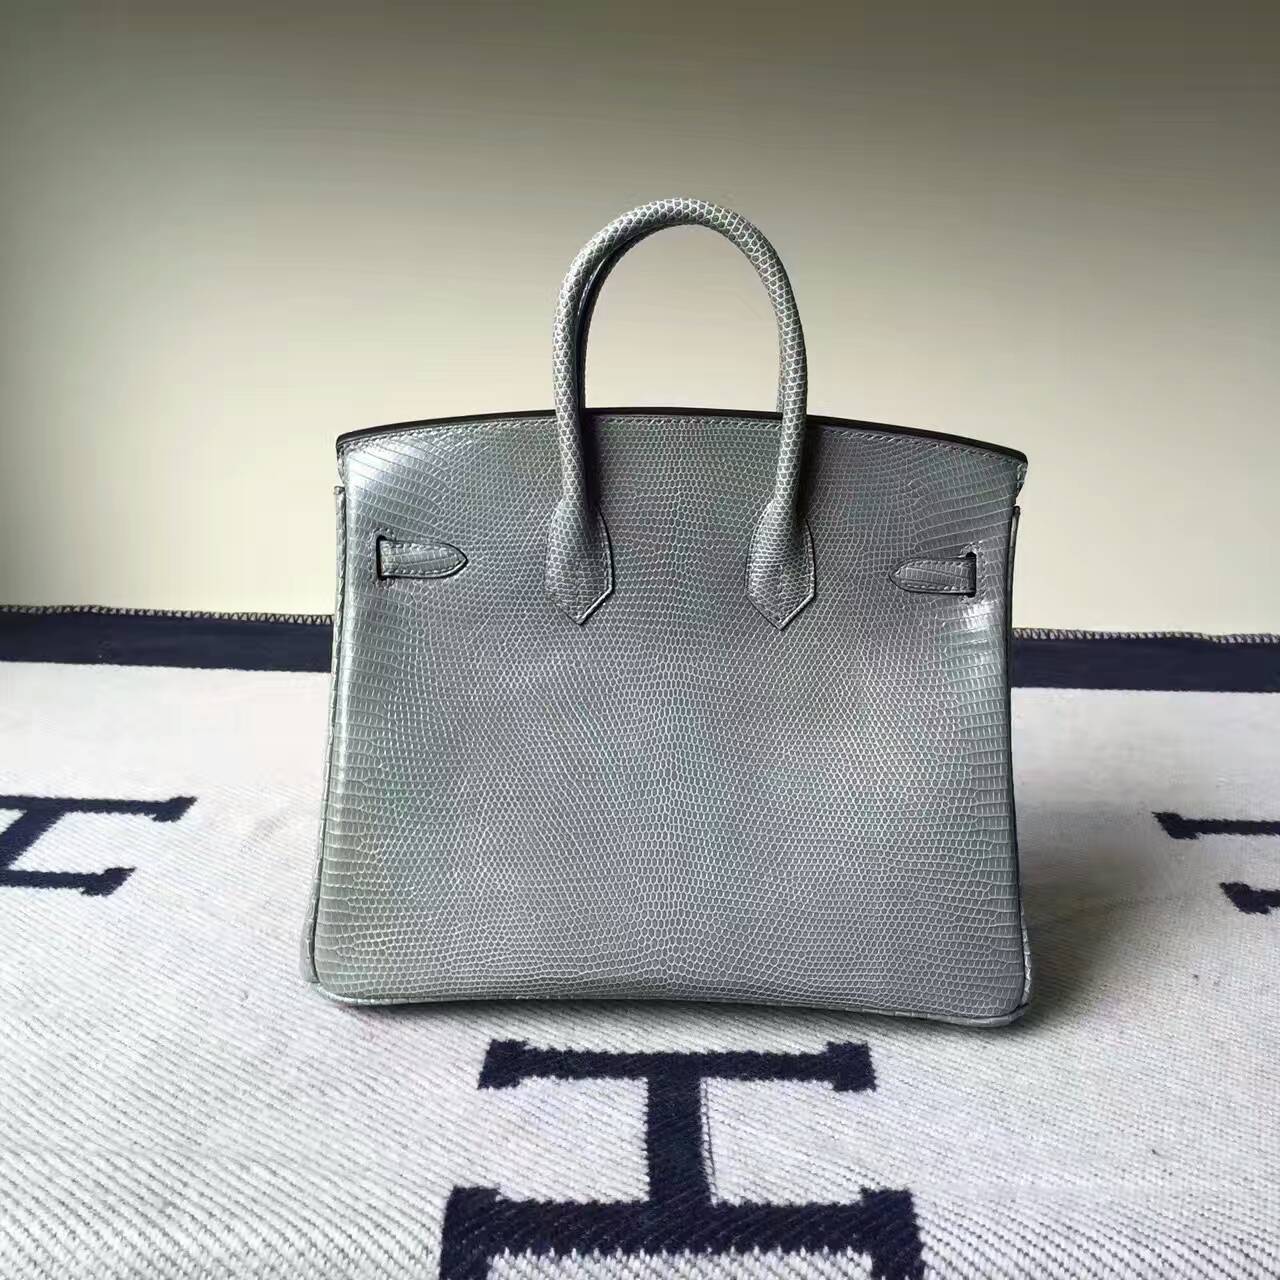 Discount Hermes C81 Gris Tourterelle Lizard Shiny Leather Birkin Bag 25cm